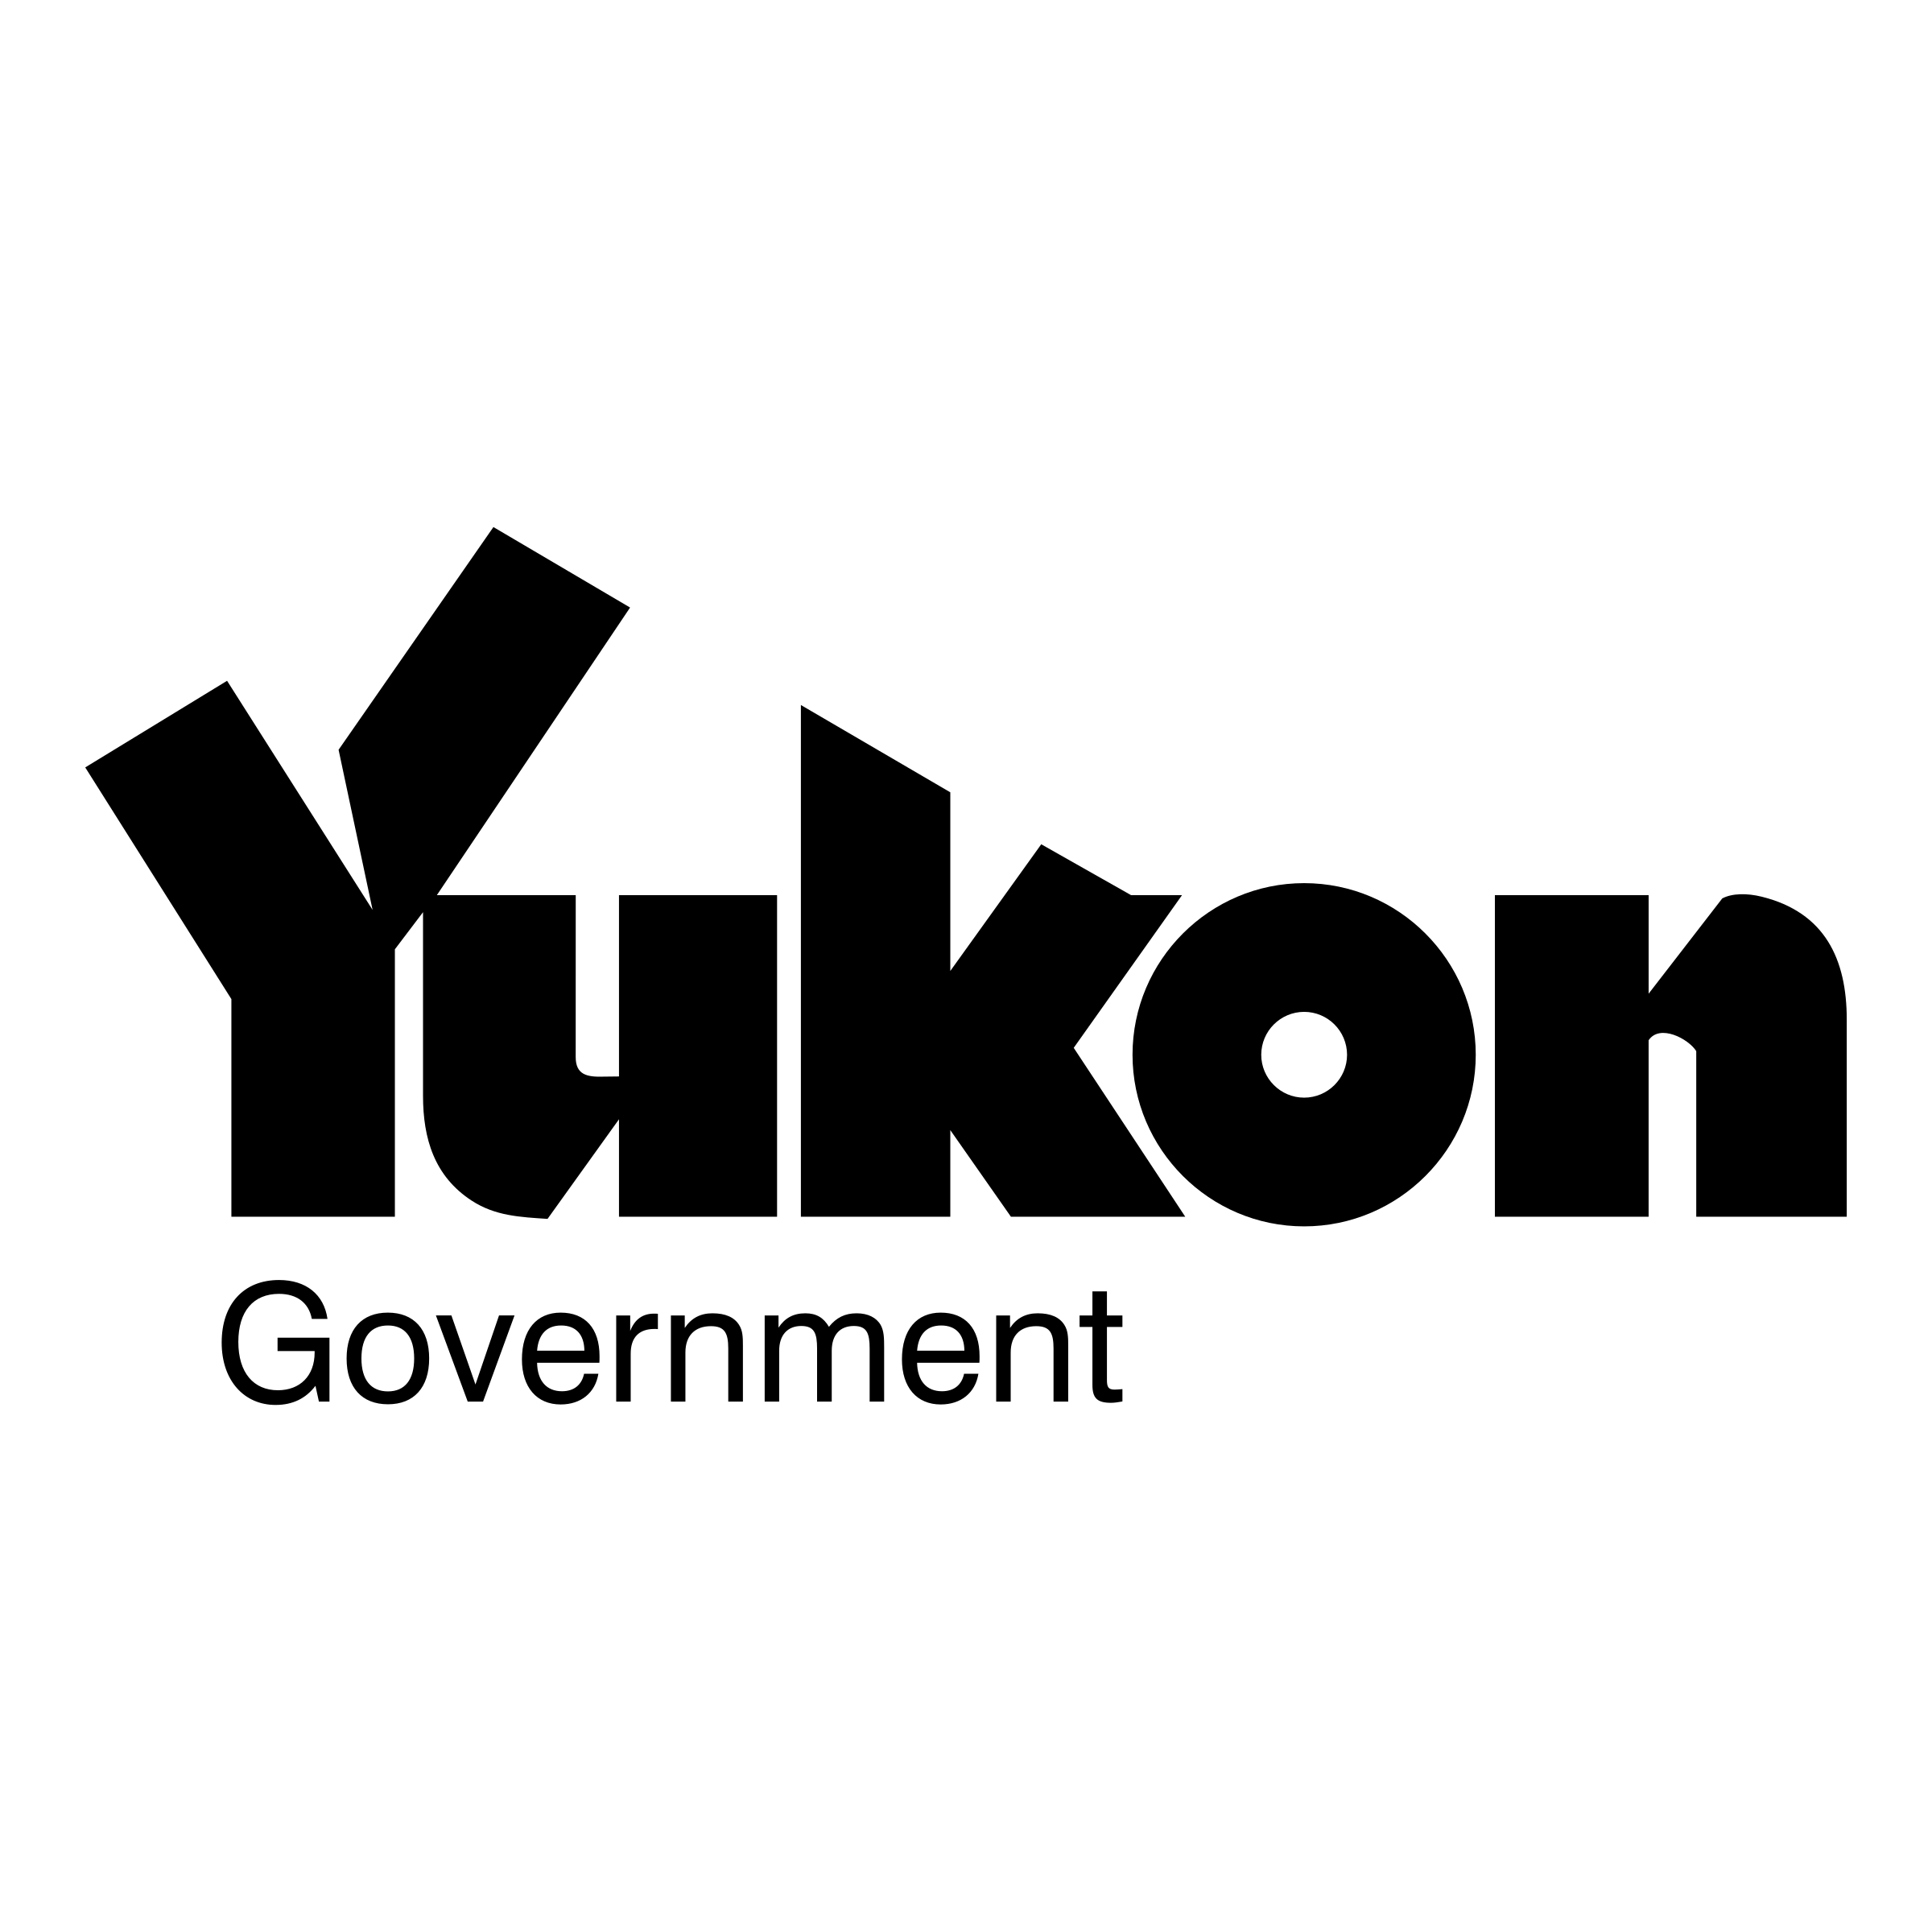 Yukon Logo - Yukon Government Logo PNG Transparent & SVG Vector - Freebie Supply